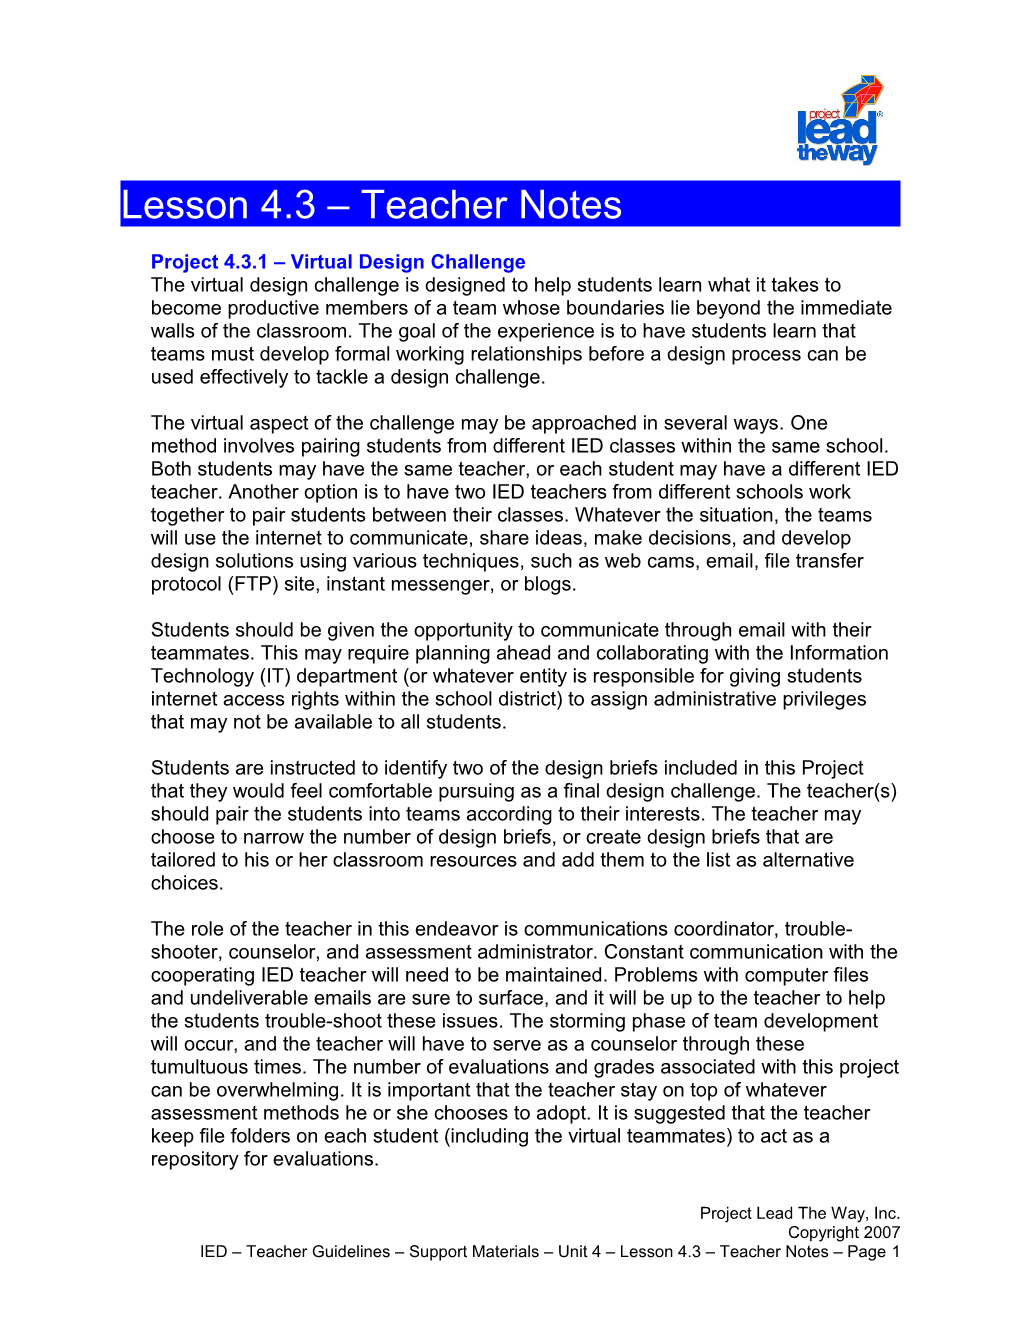 Lesson 4.3: Teacher Notes